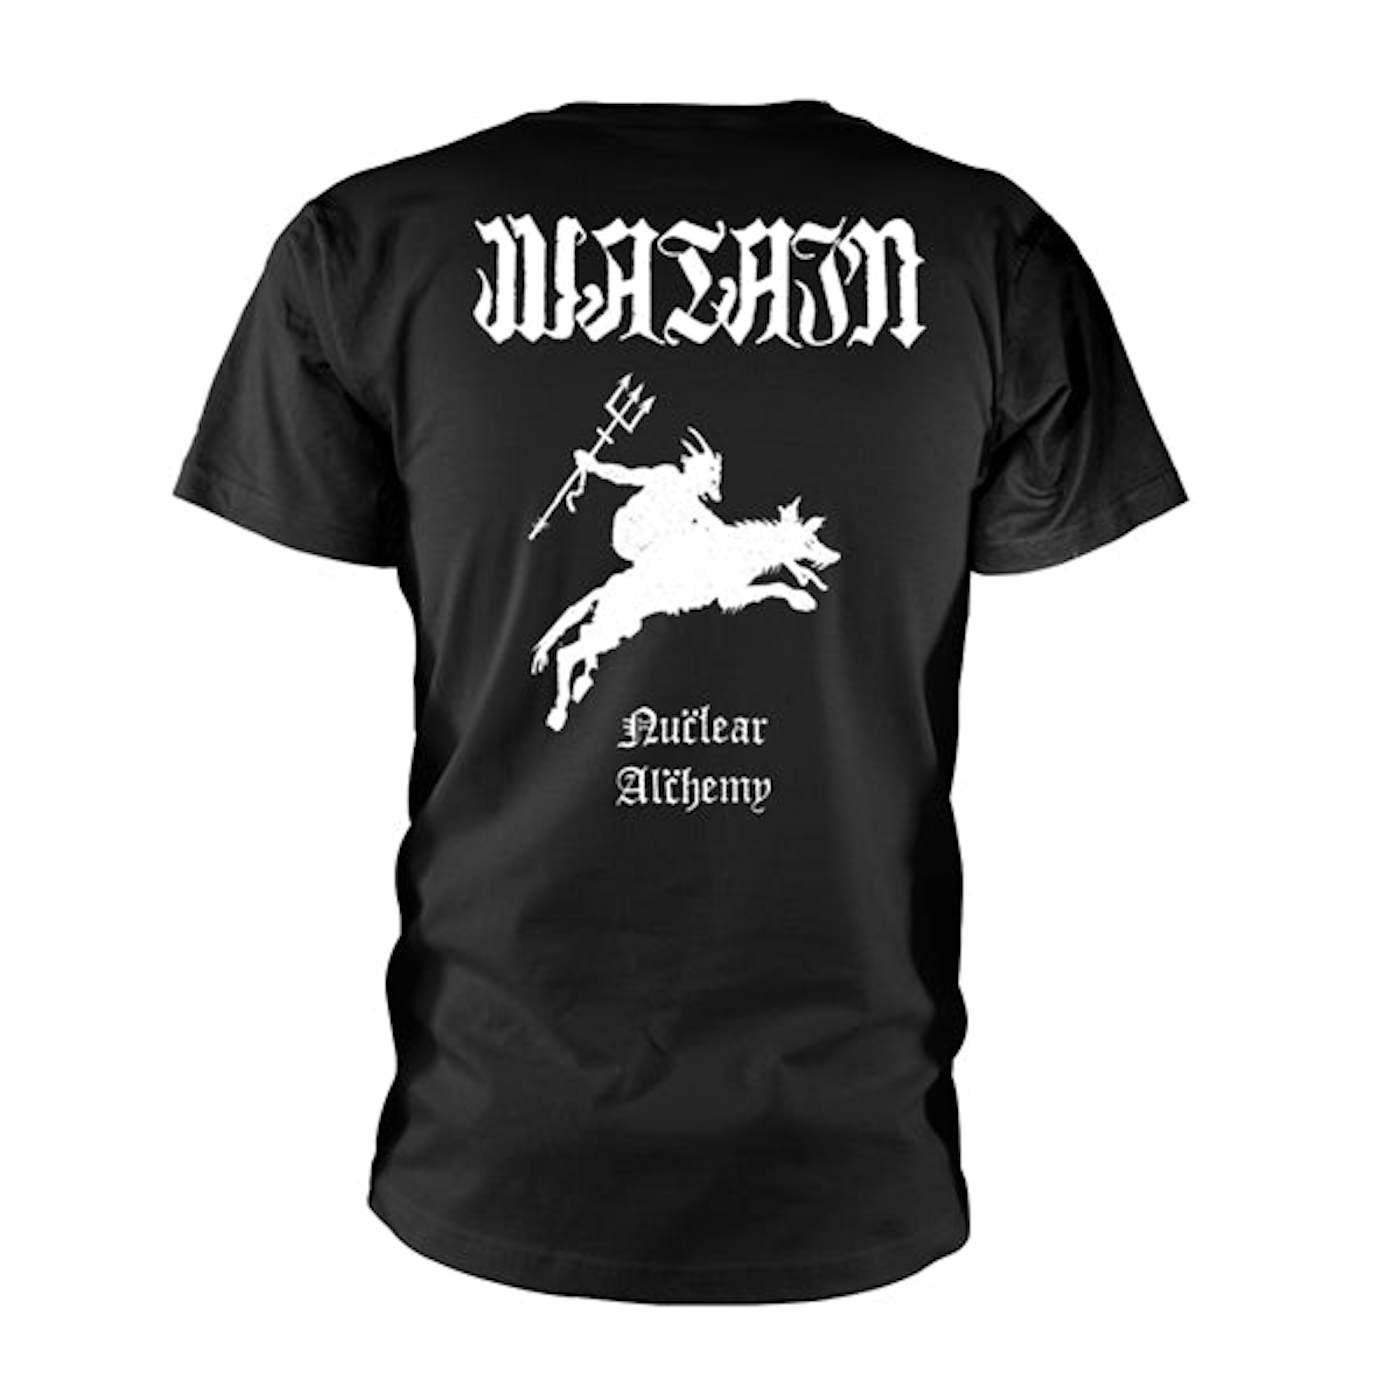 Watain T Shirt - Nuclear Alchemy